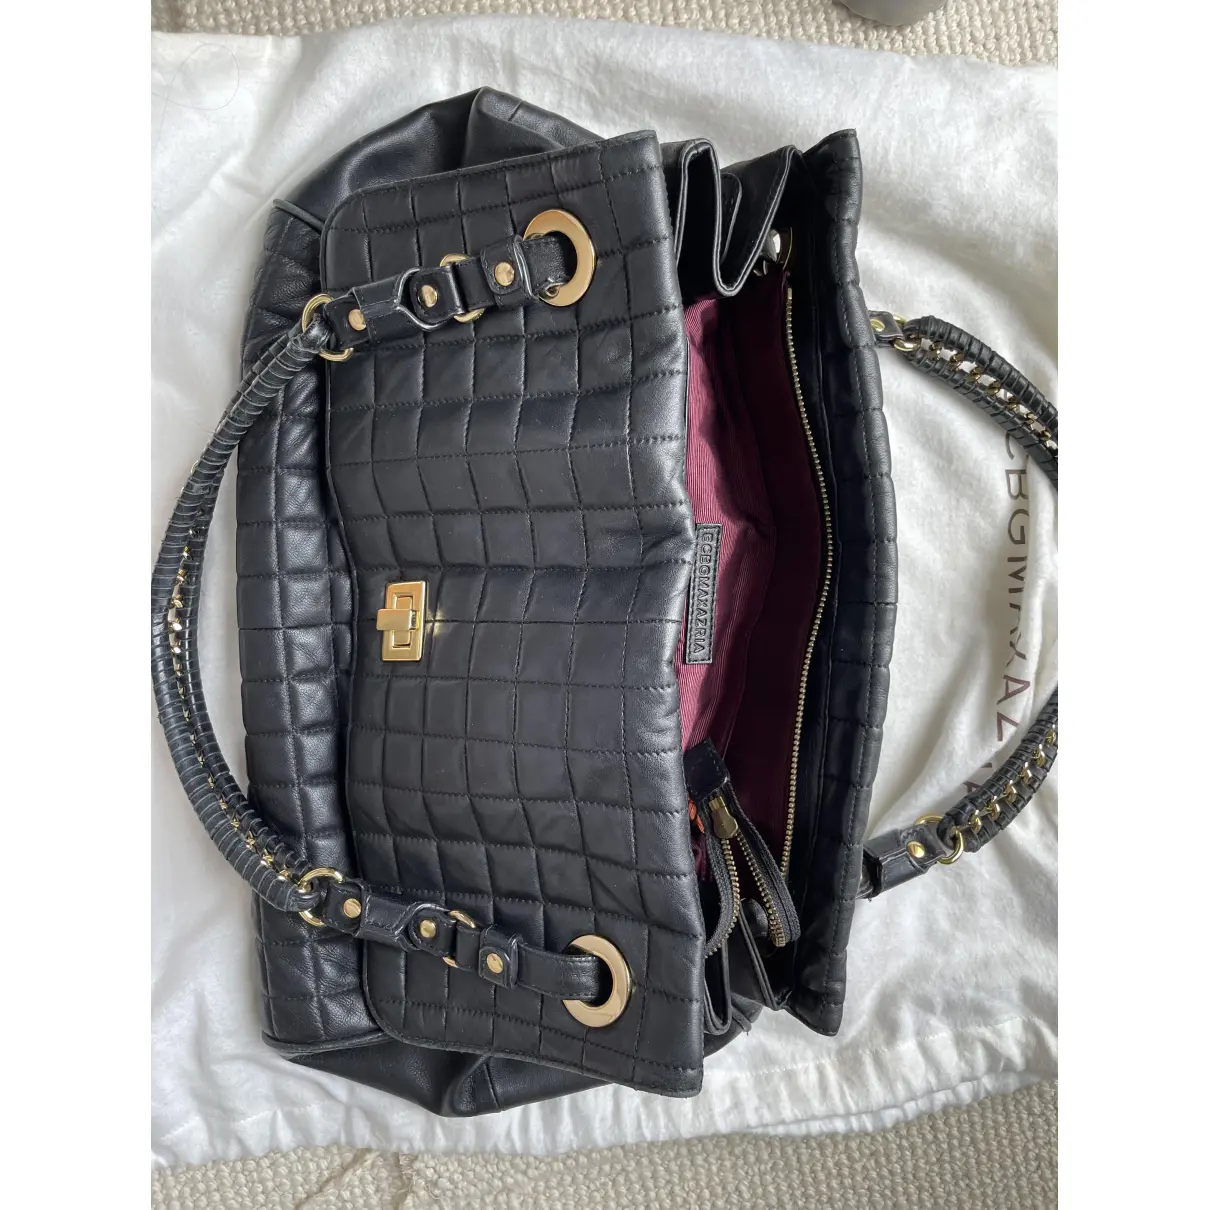 Leather handbag Bcbg Max Azria - Vintage